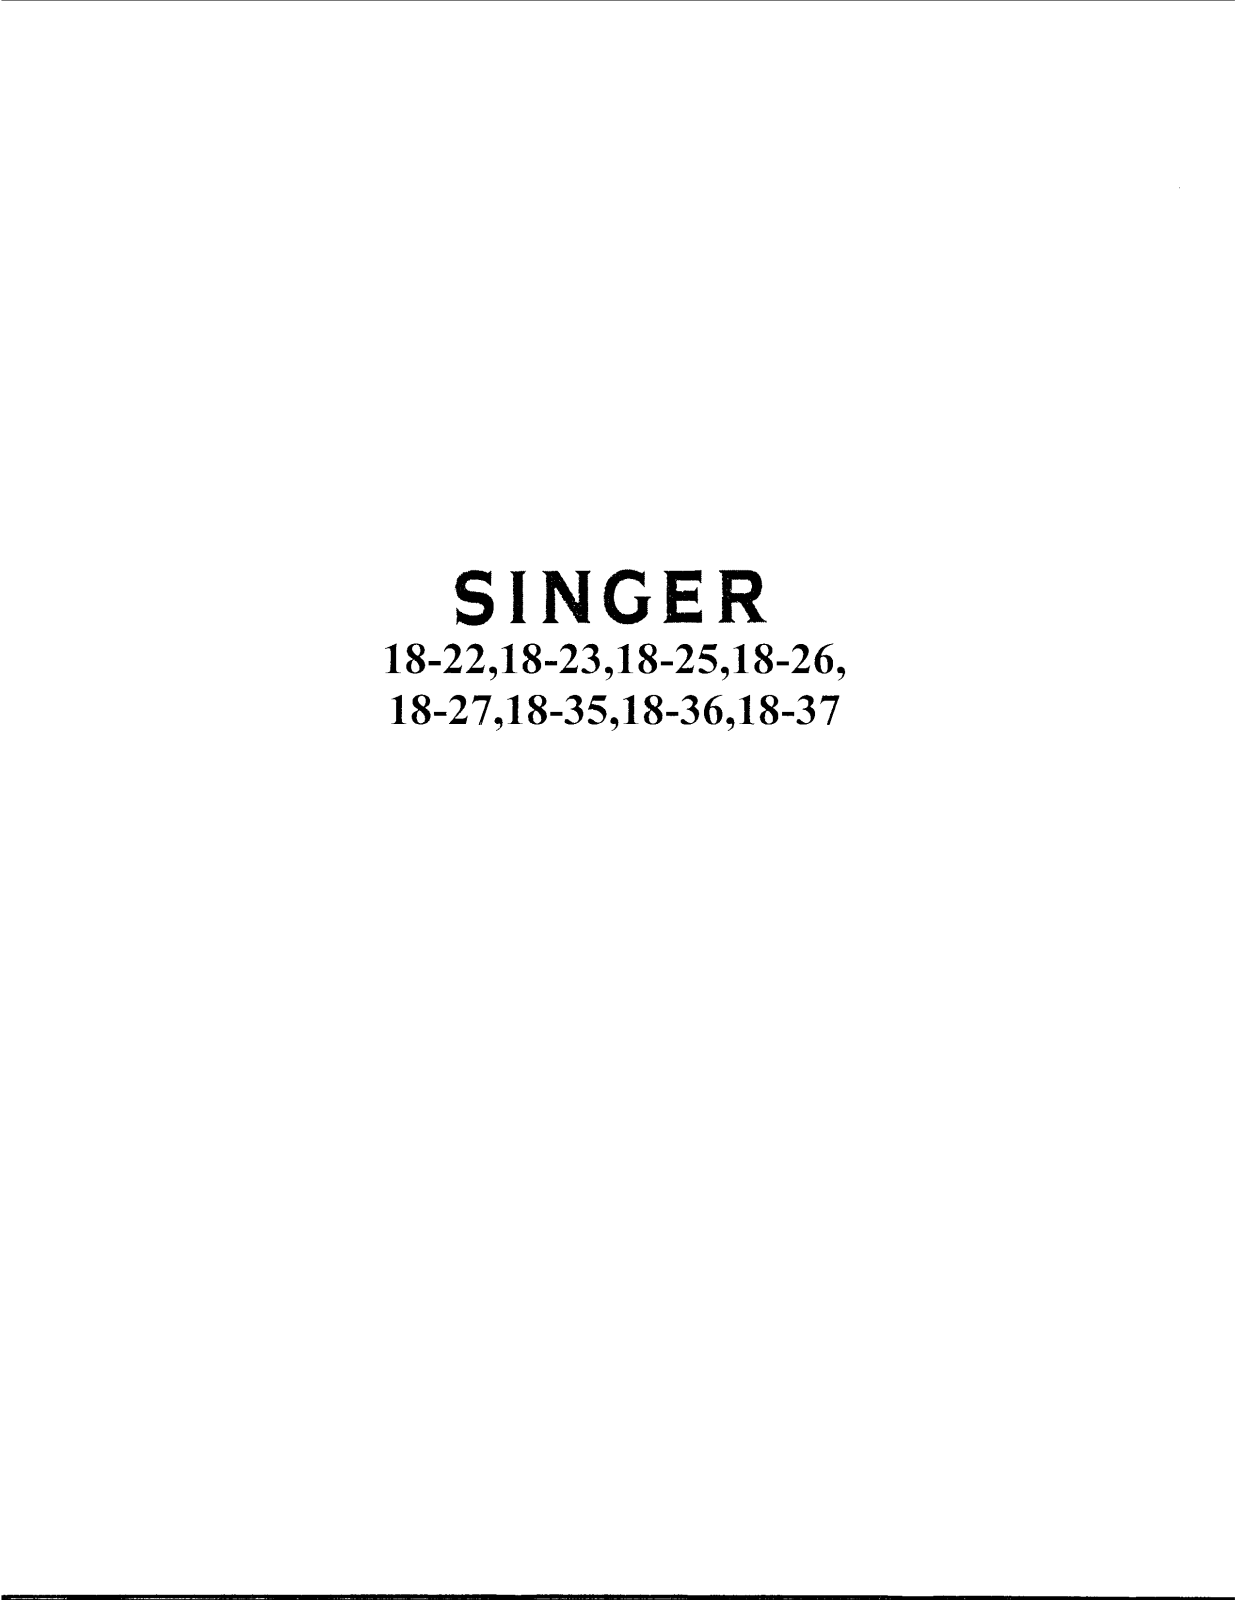 Singer 18-37, 18-36, 18-35, 18-27, 18-26 User Manual